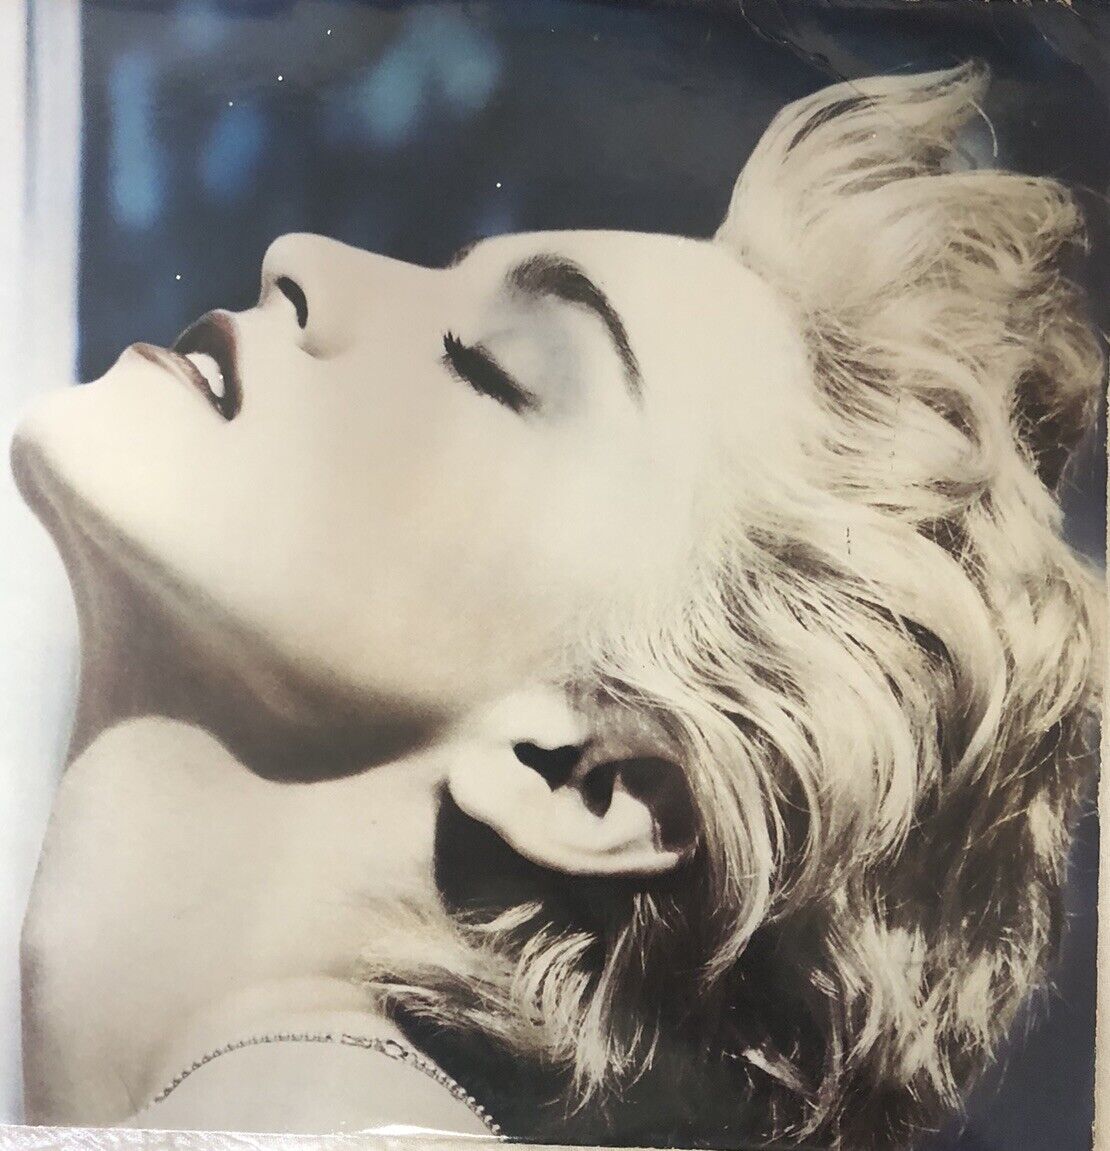 Madonna True Blue ORIGINAL 1986 LP Sire w/ poster  Excellent